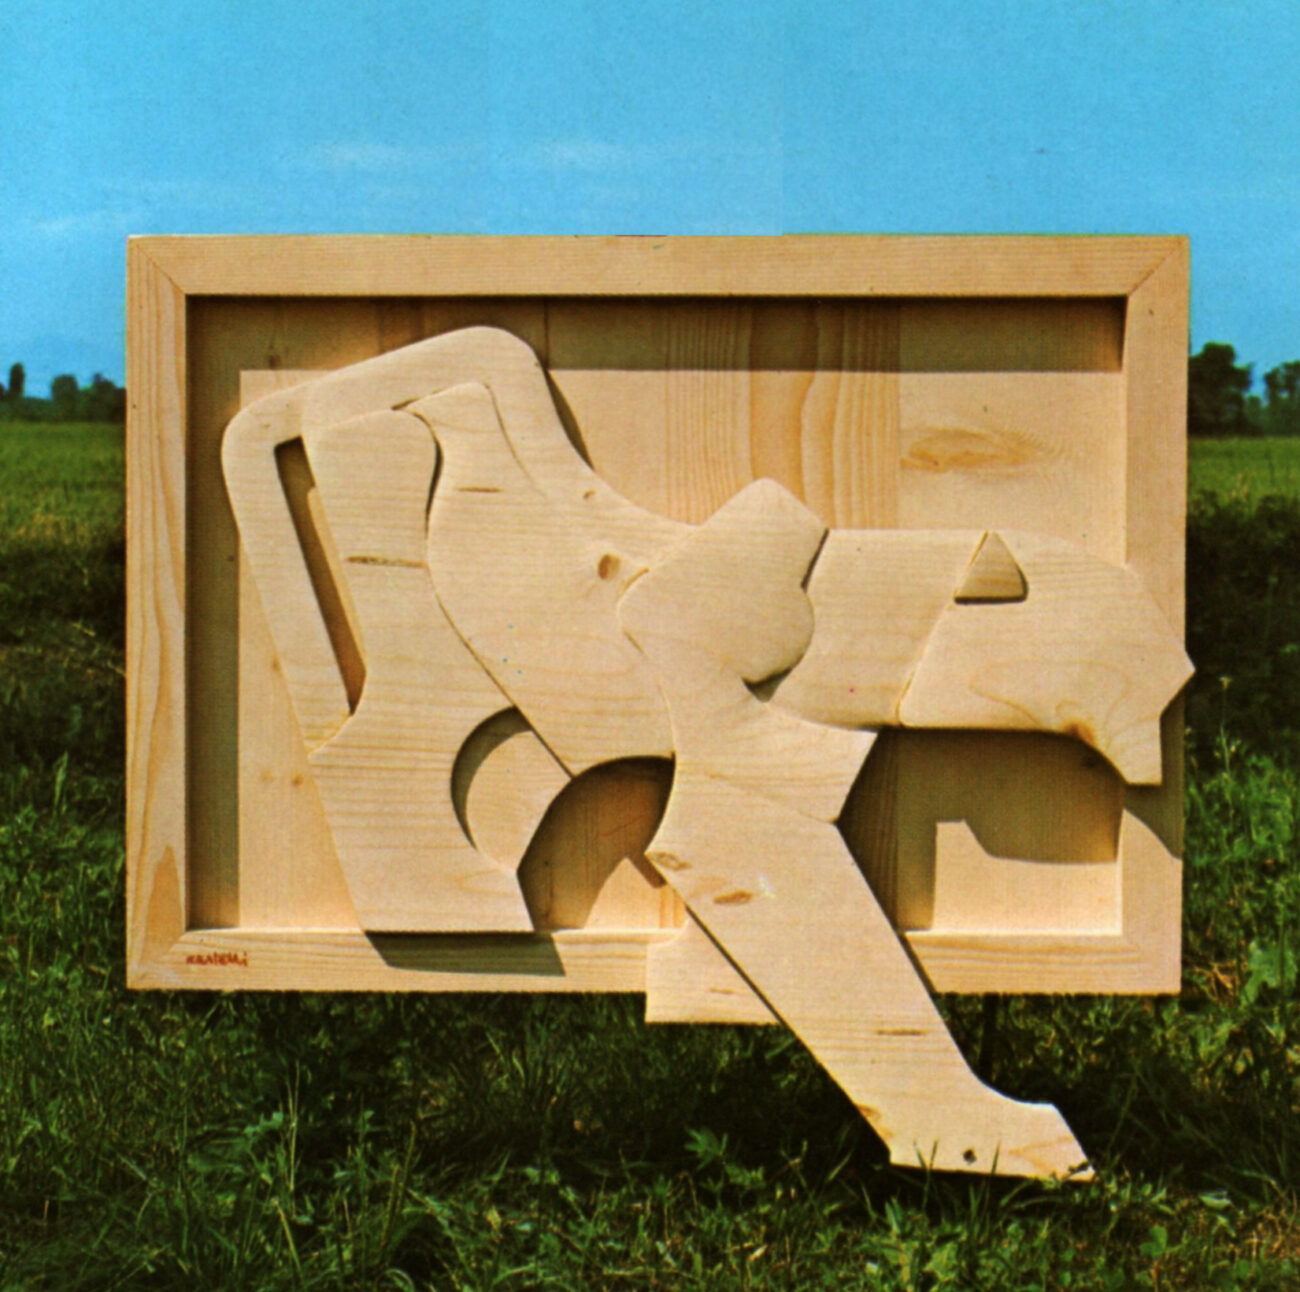 60 1975 puma scultura lignea